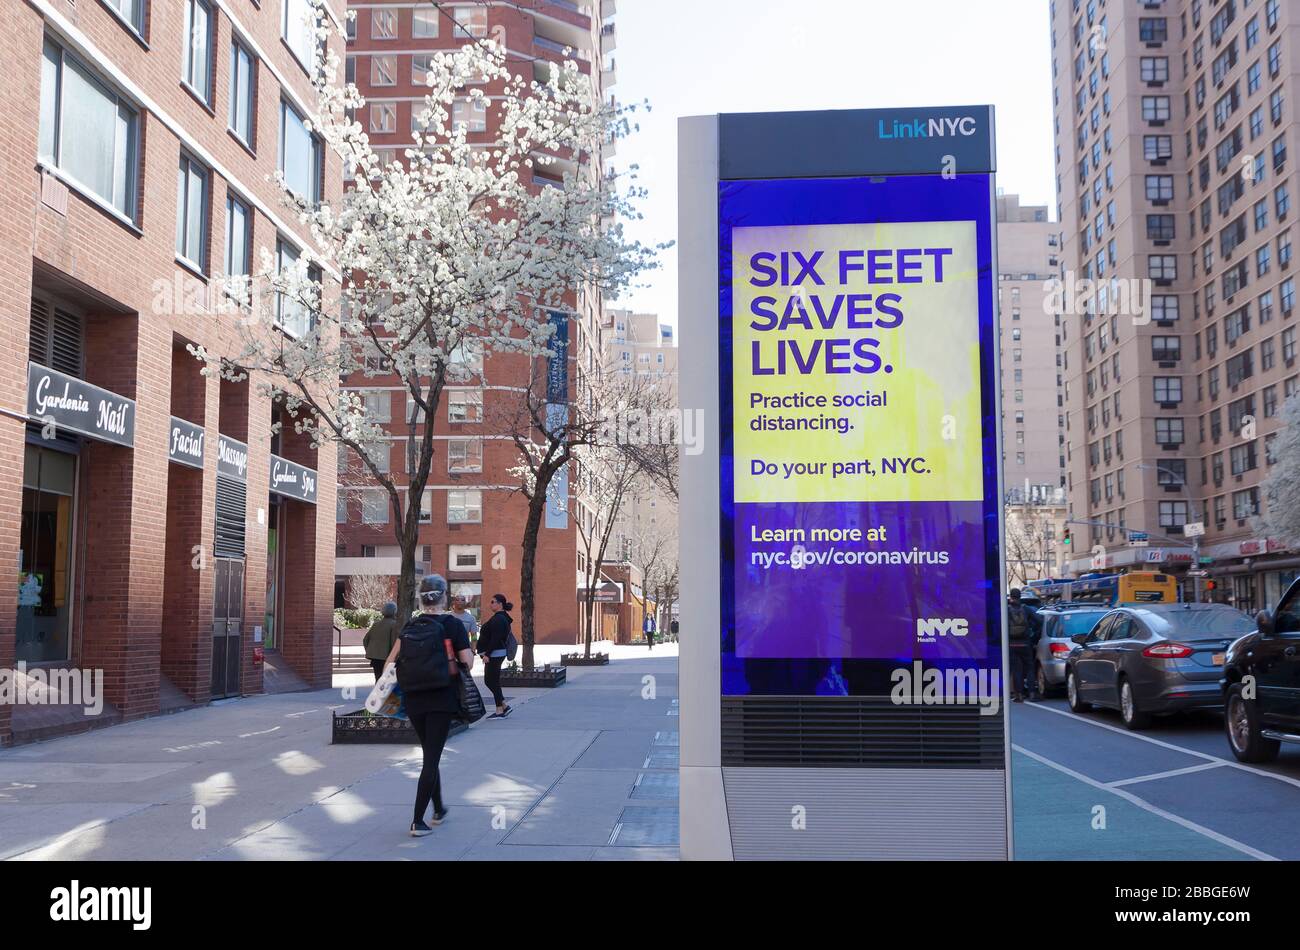 LinkNYC digital kiosk on sidewalk displaying Covid-19 (coronavirus) message to practice social distancing. Stock Photo